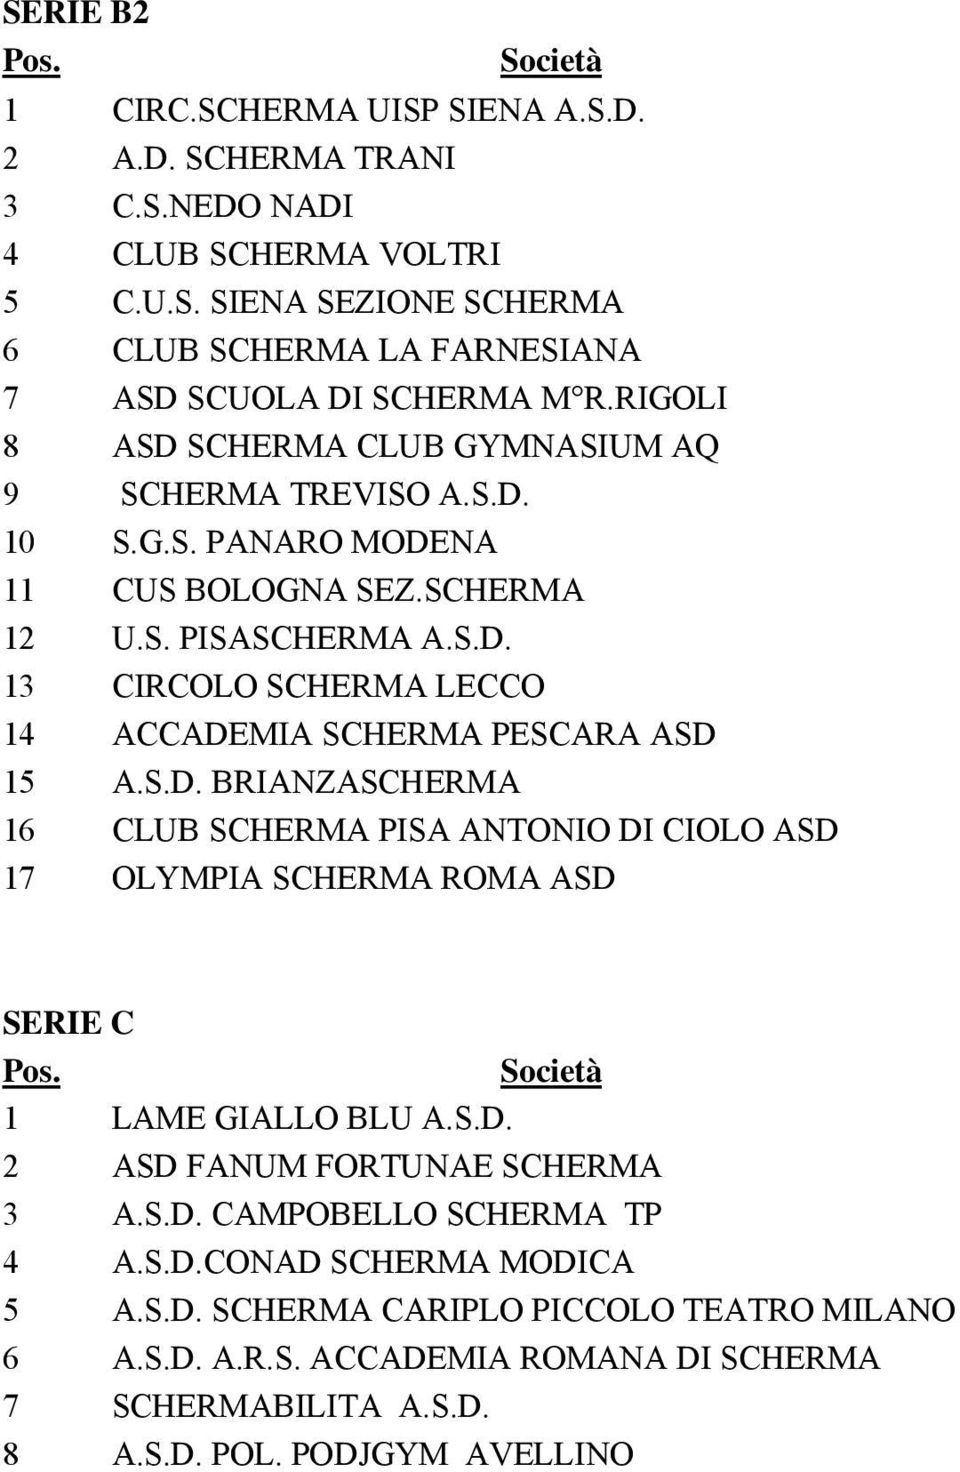 S.D. BRIANZASCHERMA 16 CLUB SCHERMA PISA ANTONIO DI CIOLO ASD 17 OLYMPIA SCHERMA ROMA ASD SERIE C 1 LAME GIALLO BLU A.S.D. 2 ASD FANUM FORTUNAE SCHERMA 3 A.S.D. CAMPOBELLO SCHERMA TP 4 A.